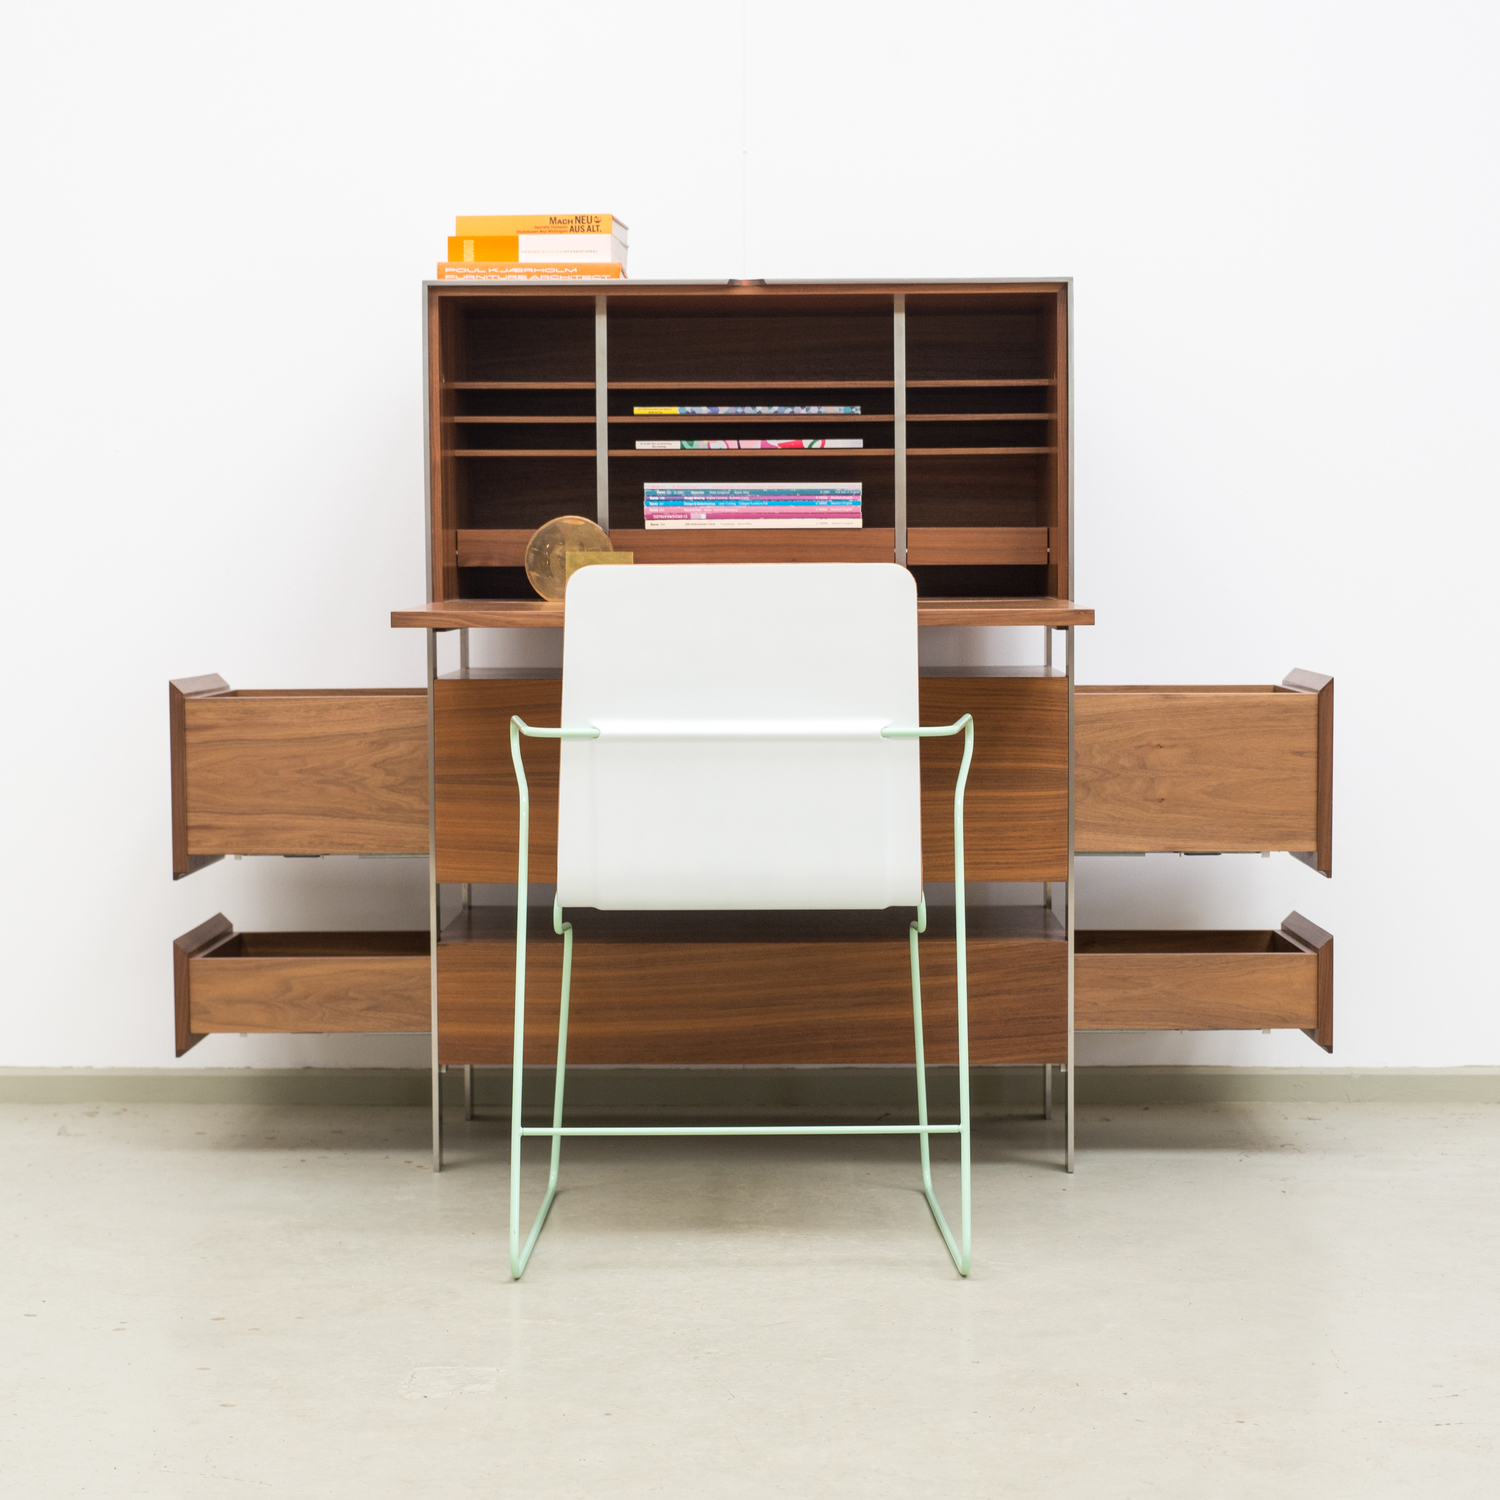 Bender Chair / Frederik Kurzweg Design Studio (1)